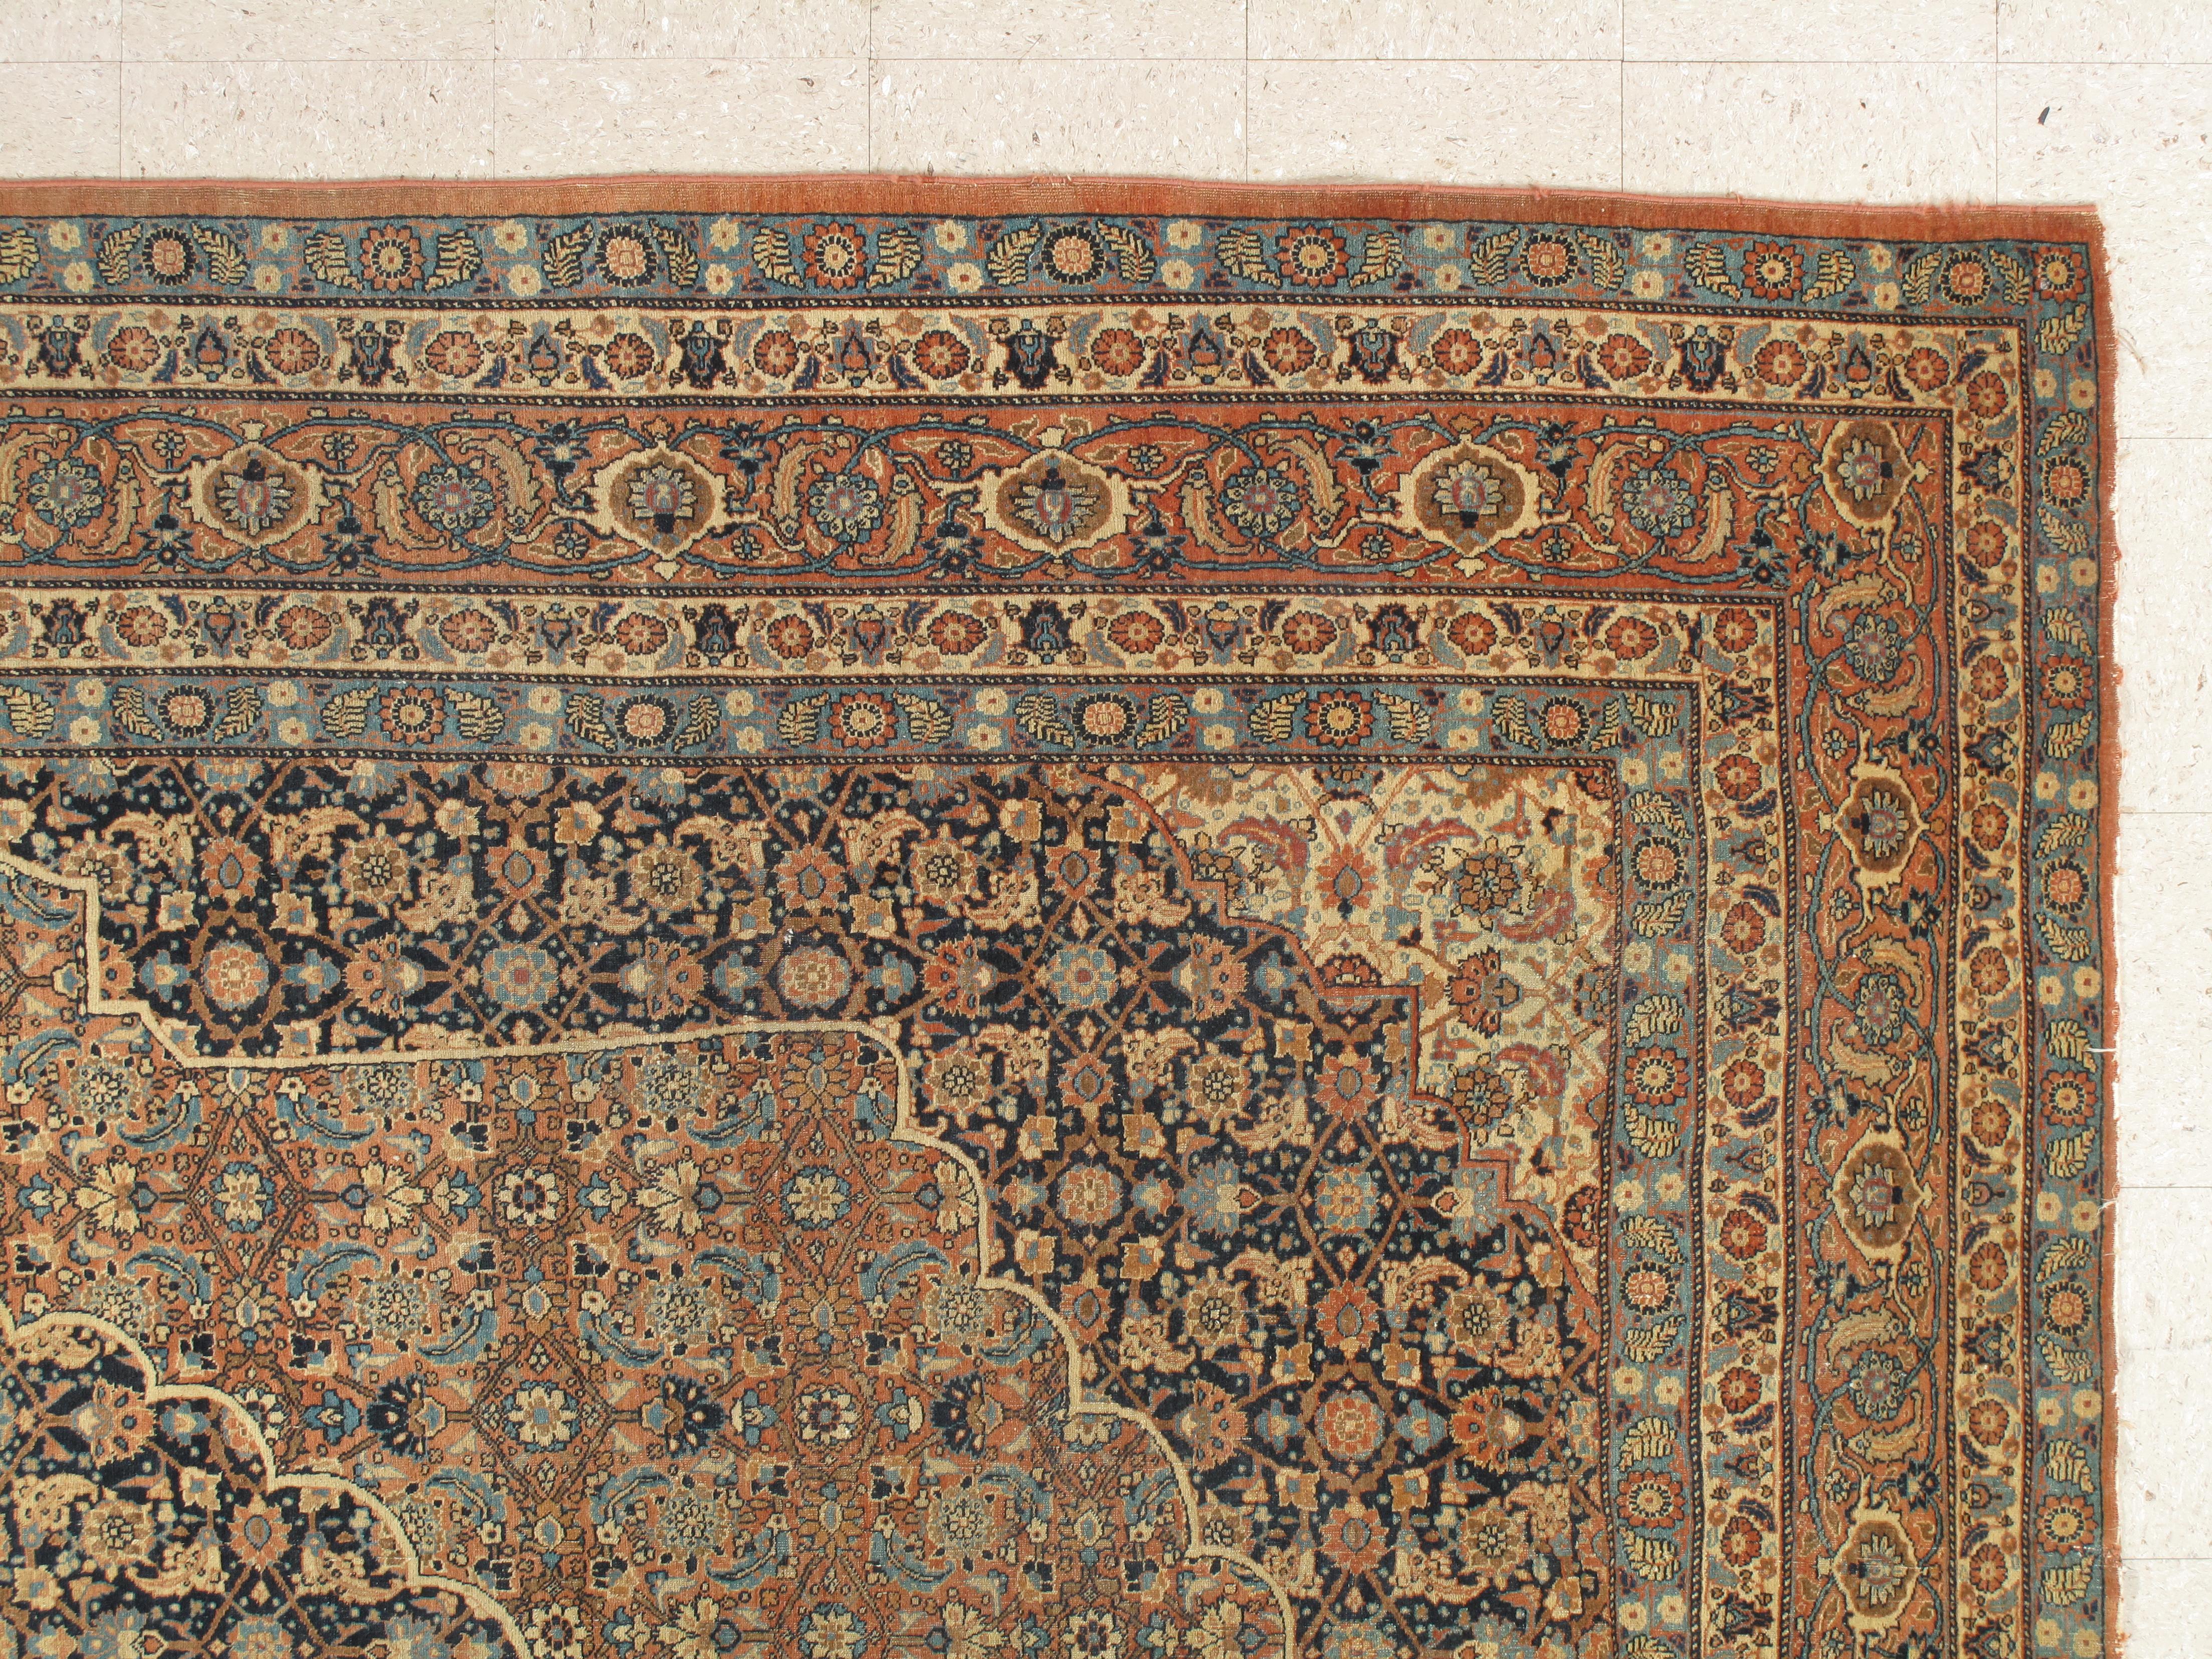 Hand-Knotted Antique Tabriz Carpet, Hadji Jalili Persian Rug, Earth Tones, Brown, Terracotta